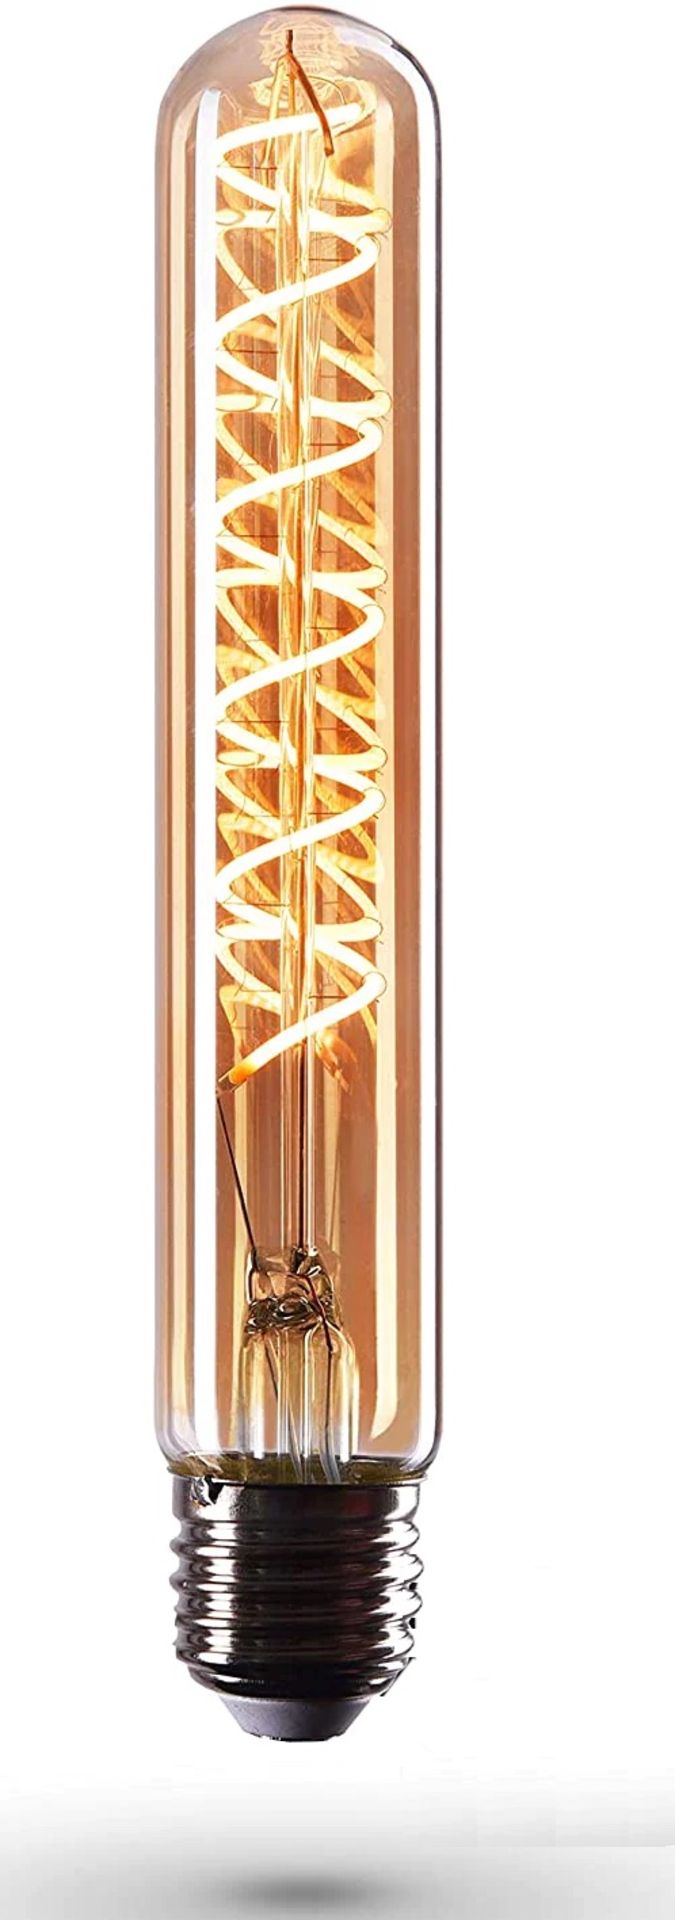 6 x CROWN LED Edison Flat Pipe Lightbulb 4W/40W Warm White - NEW & BOXED - BIG RRP! - Image 5 of 8